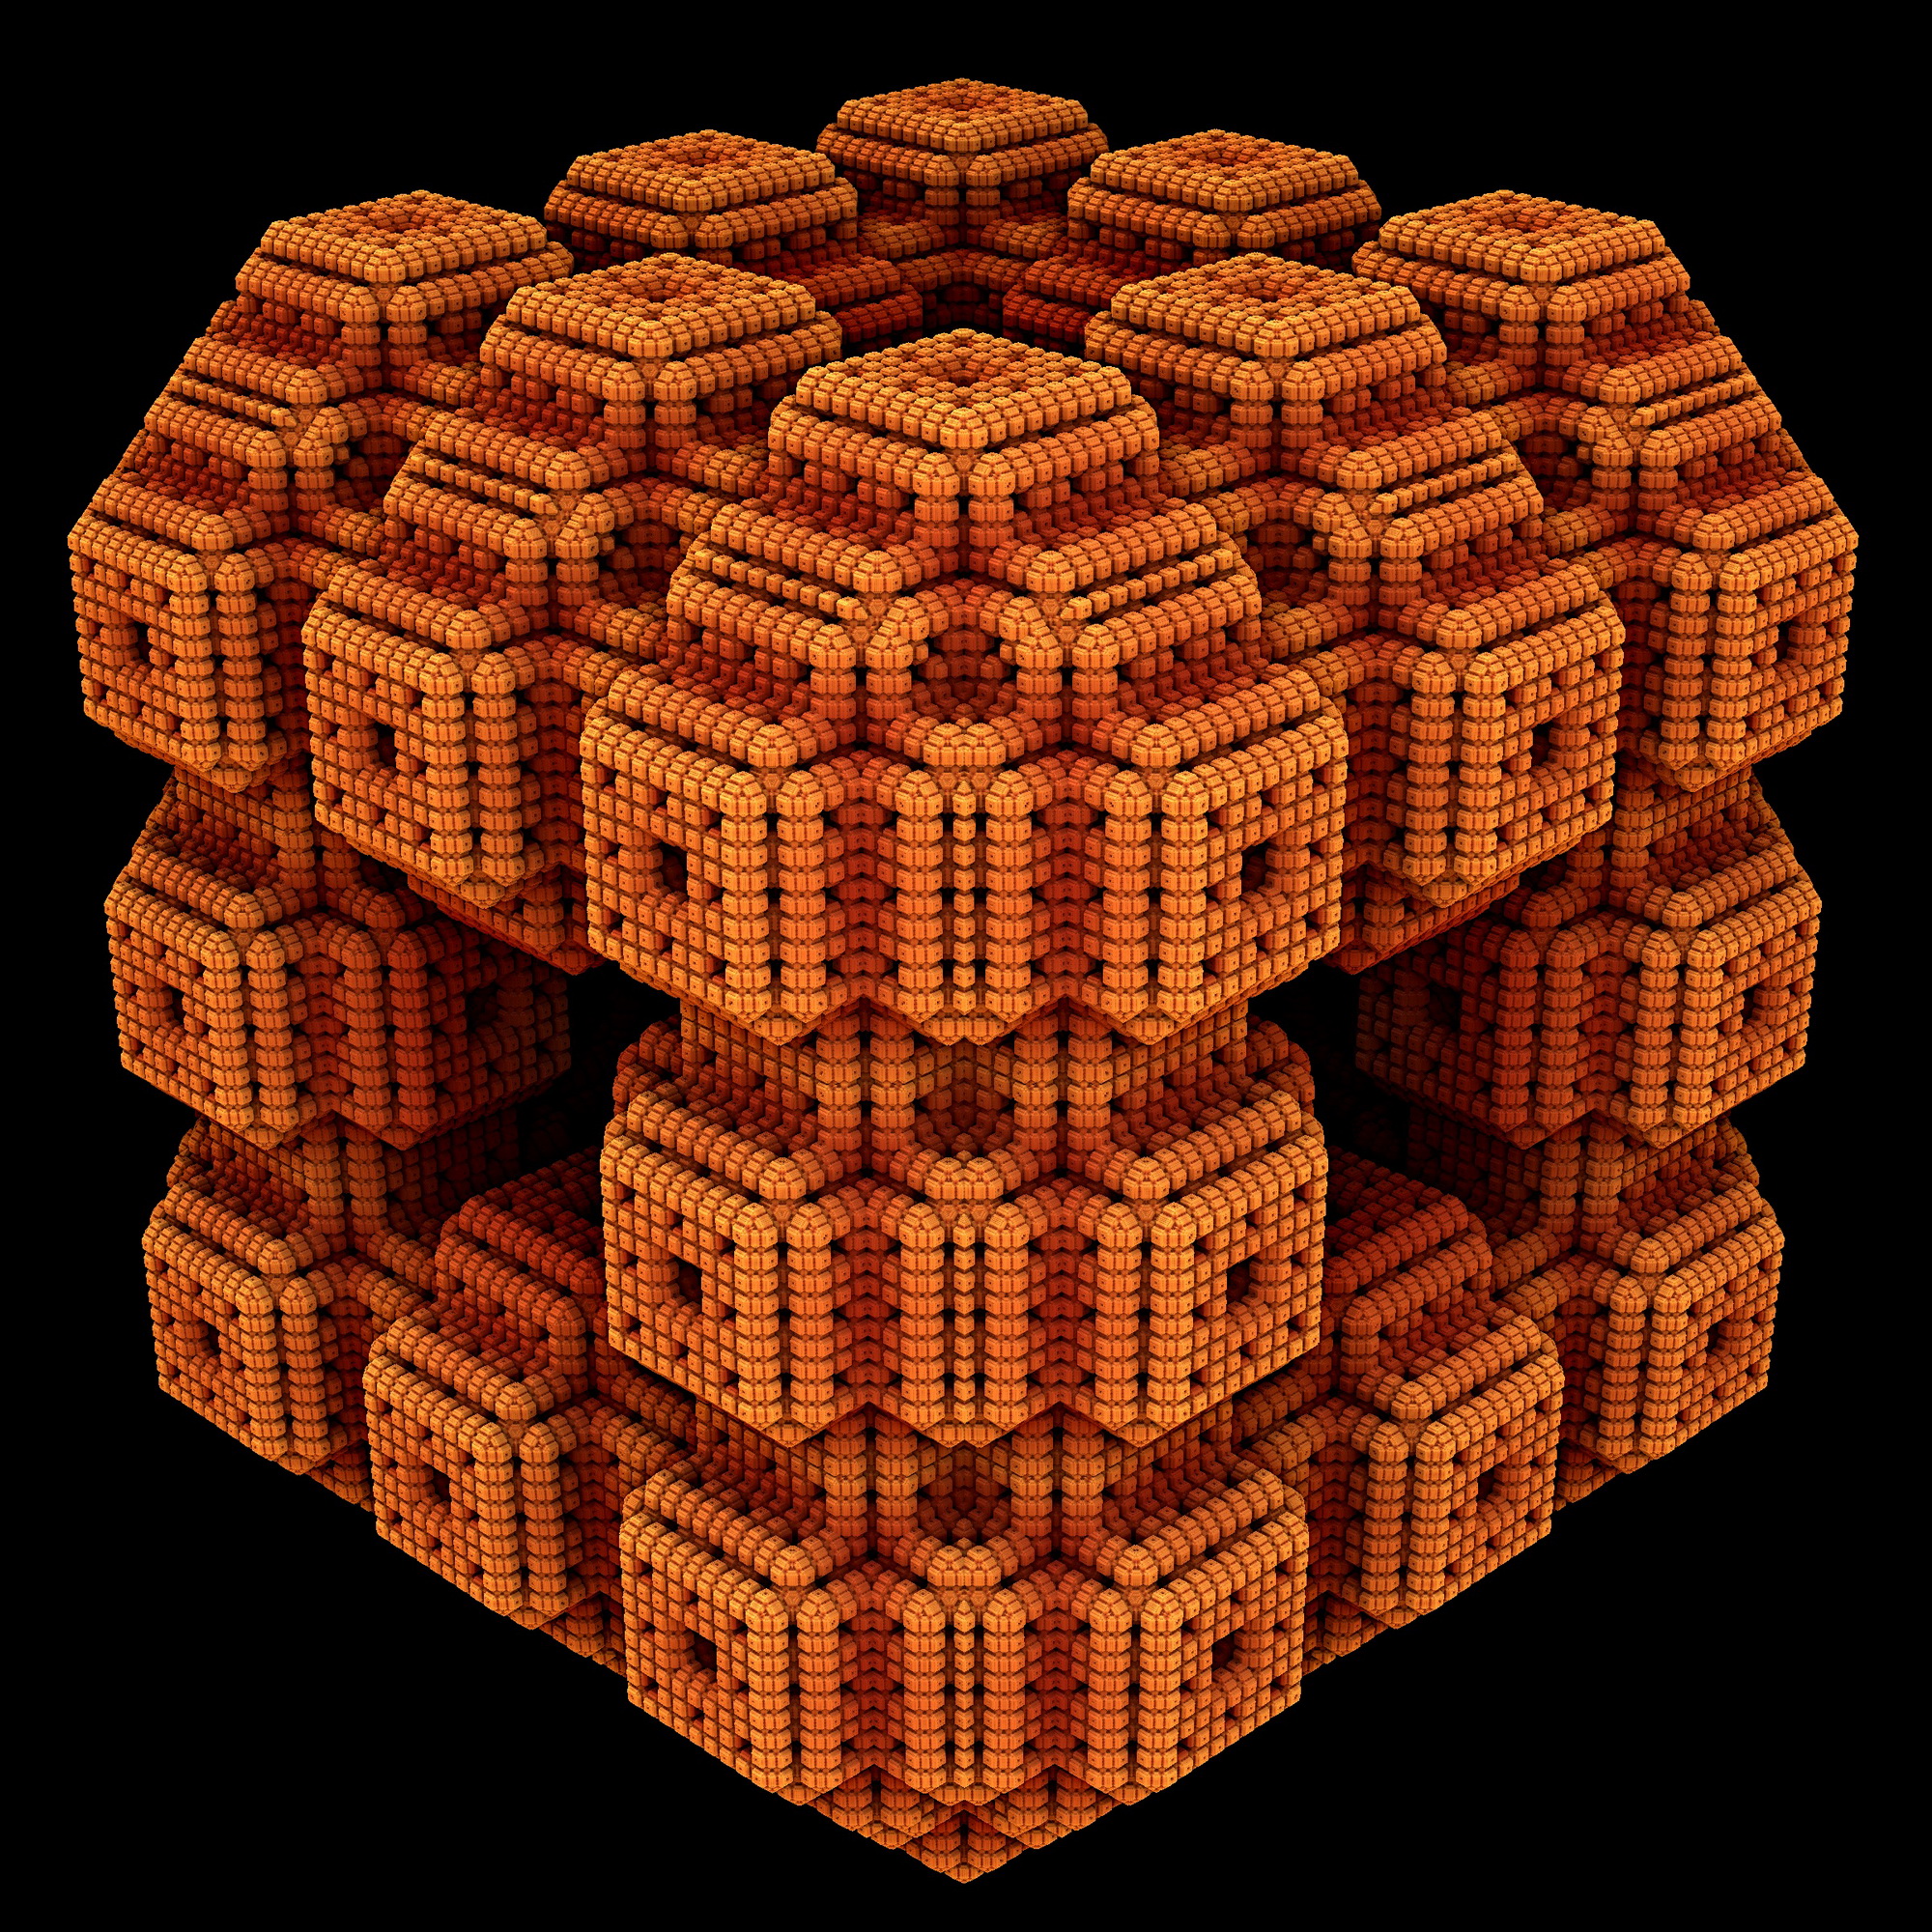 LEGO Cube